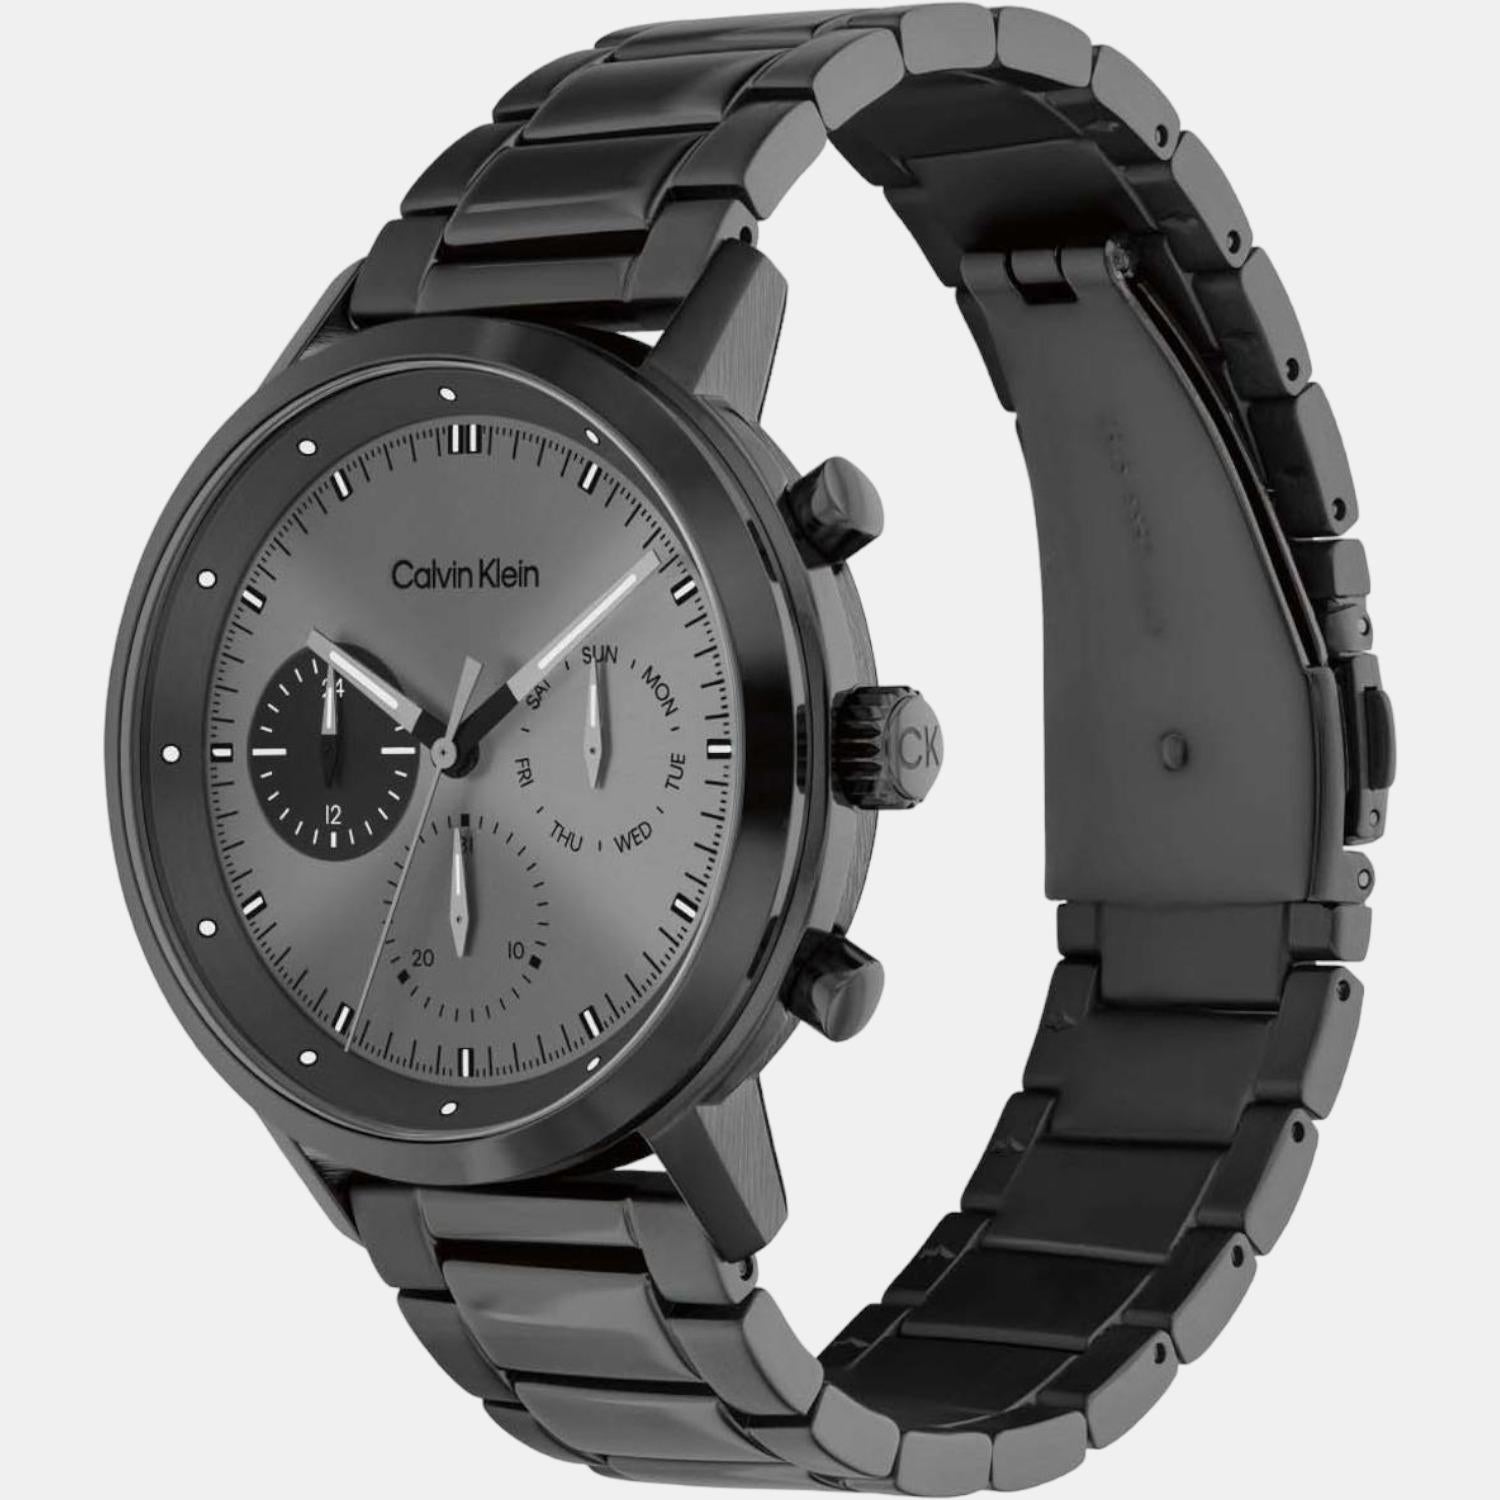 Calvin Klein Male Analog Stainless Steel Watch | Calvin Klein – Just In Time